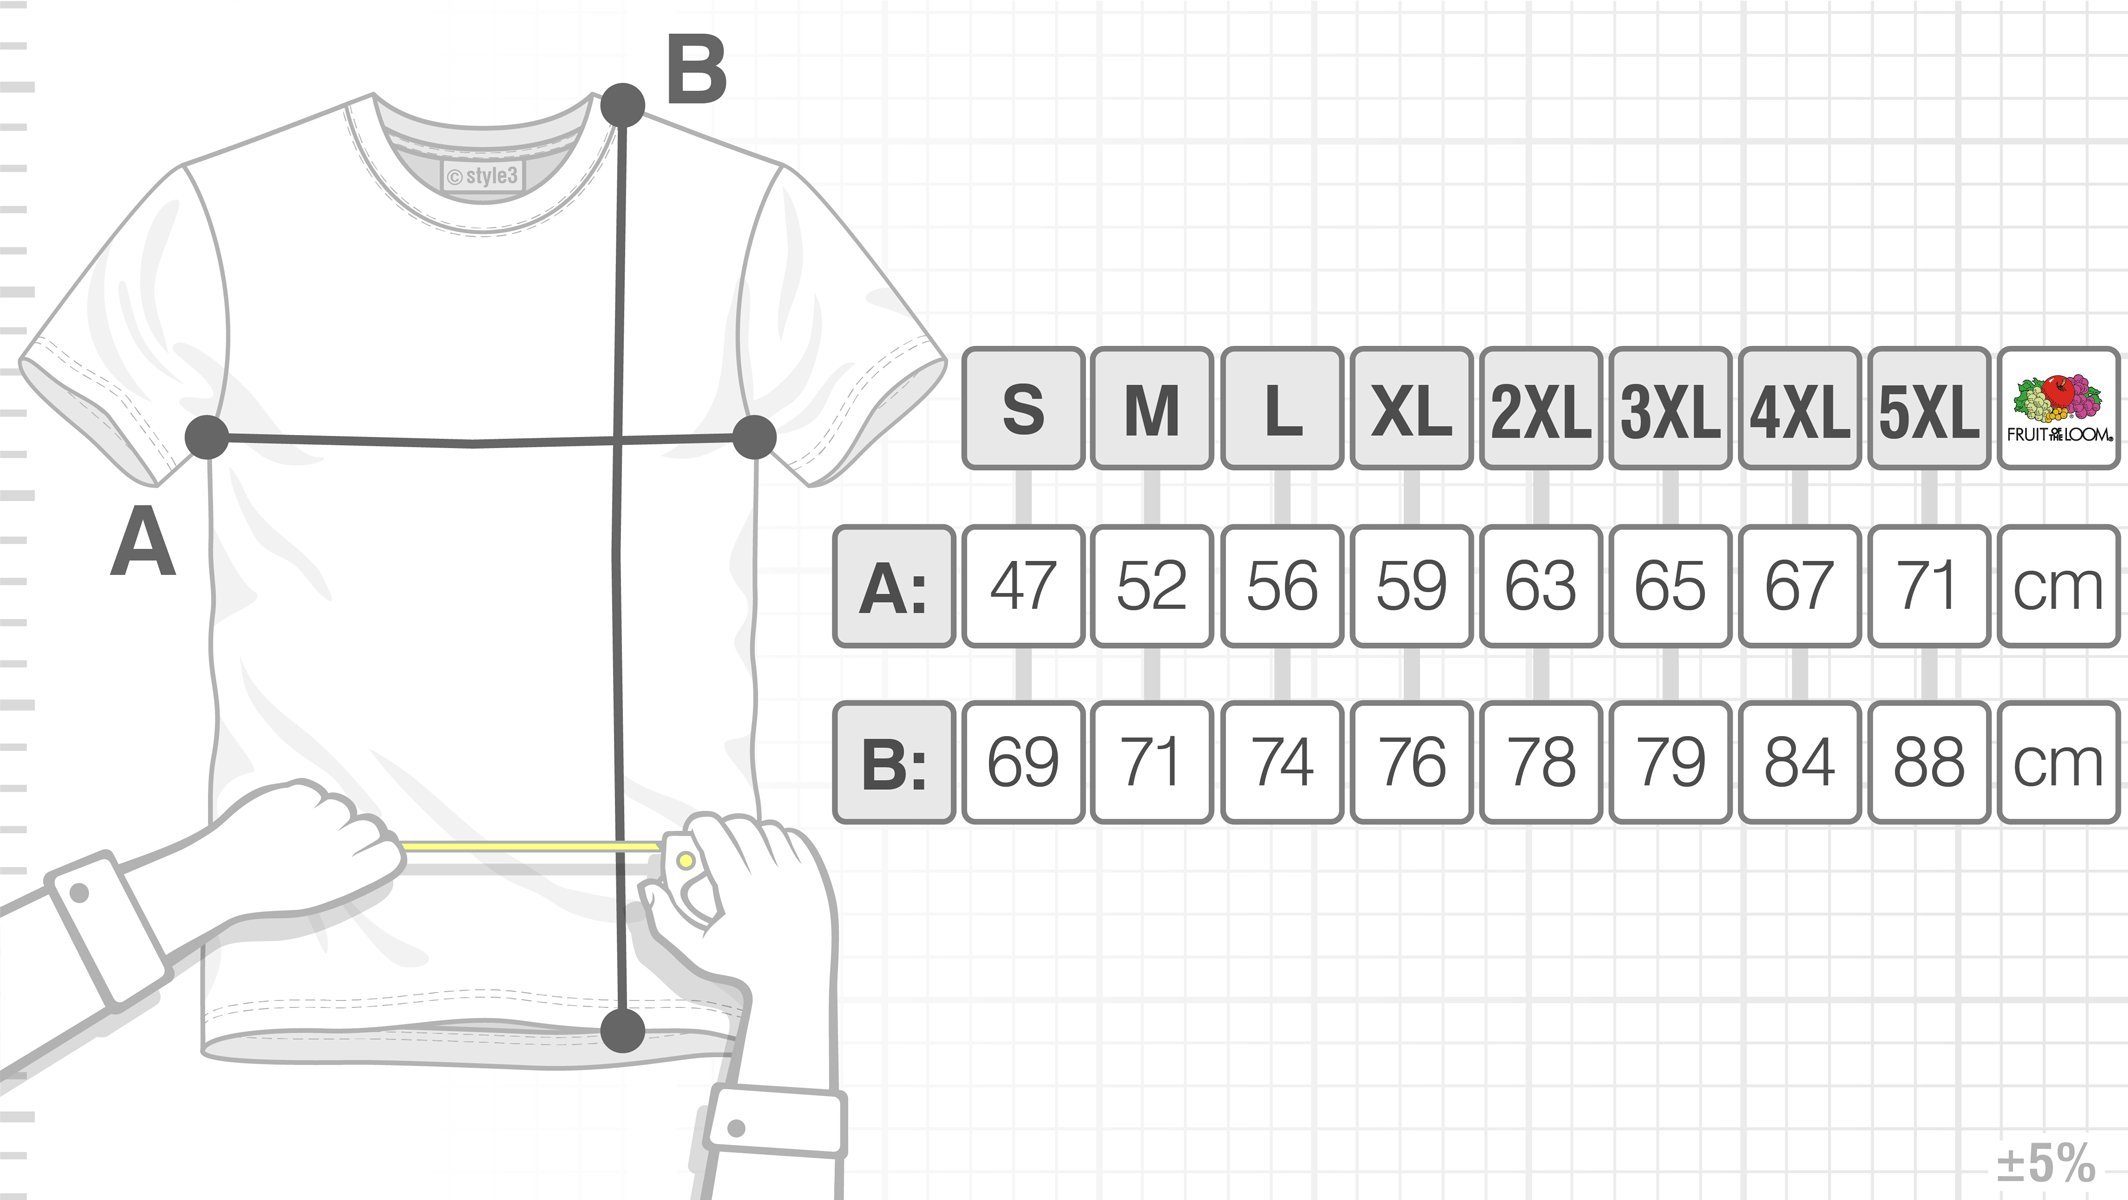 Dreieck Cooper Sheldon lila Print-Shirt Penrose Theory Bang Würfel style3 T-Shirt geo Escher Big Herren